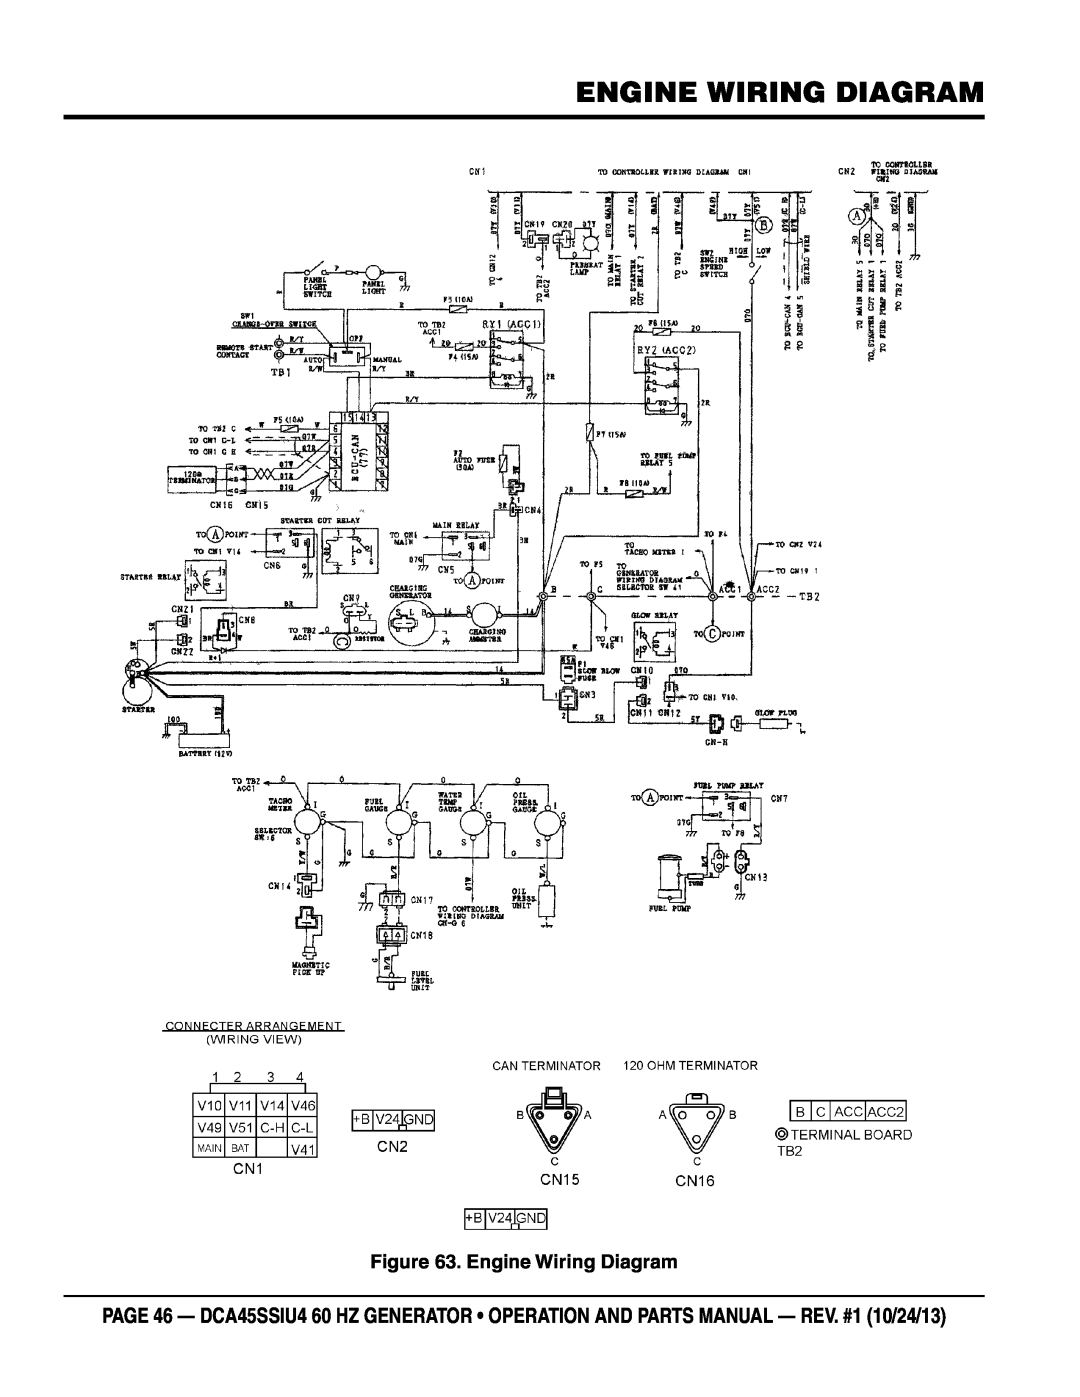 Multiquip dca45ssiu4 manual Engine Wiring Diagram 